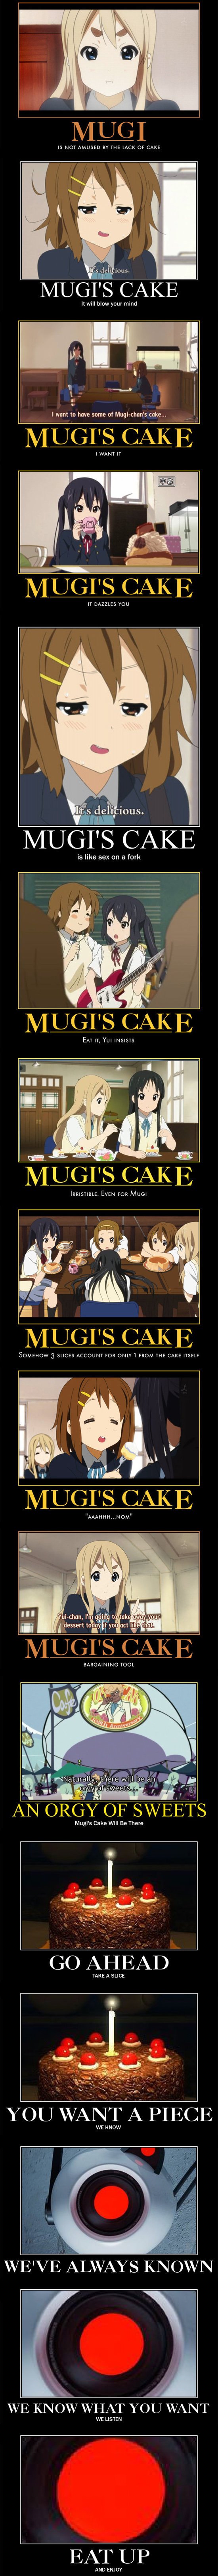 Mugi's Cake